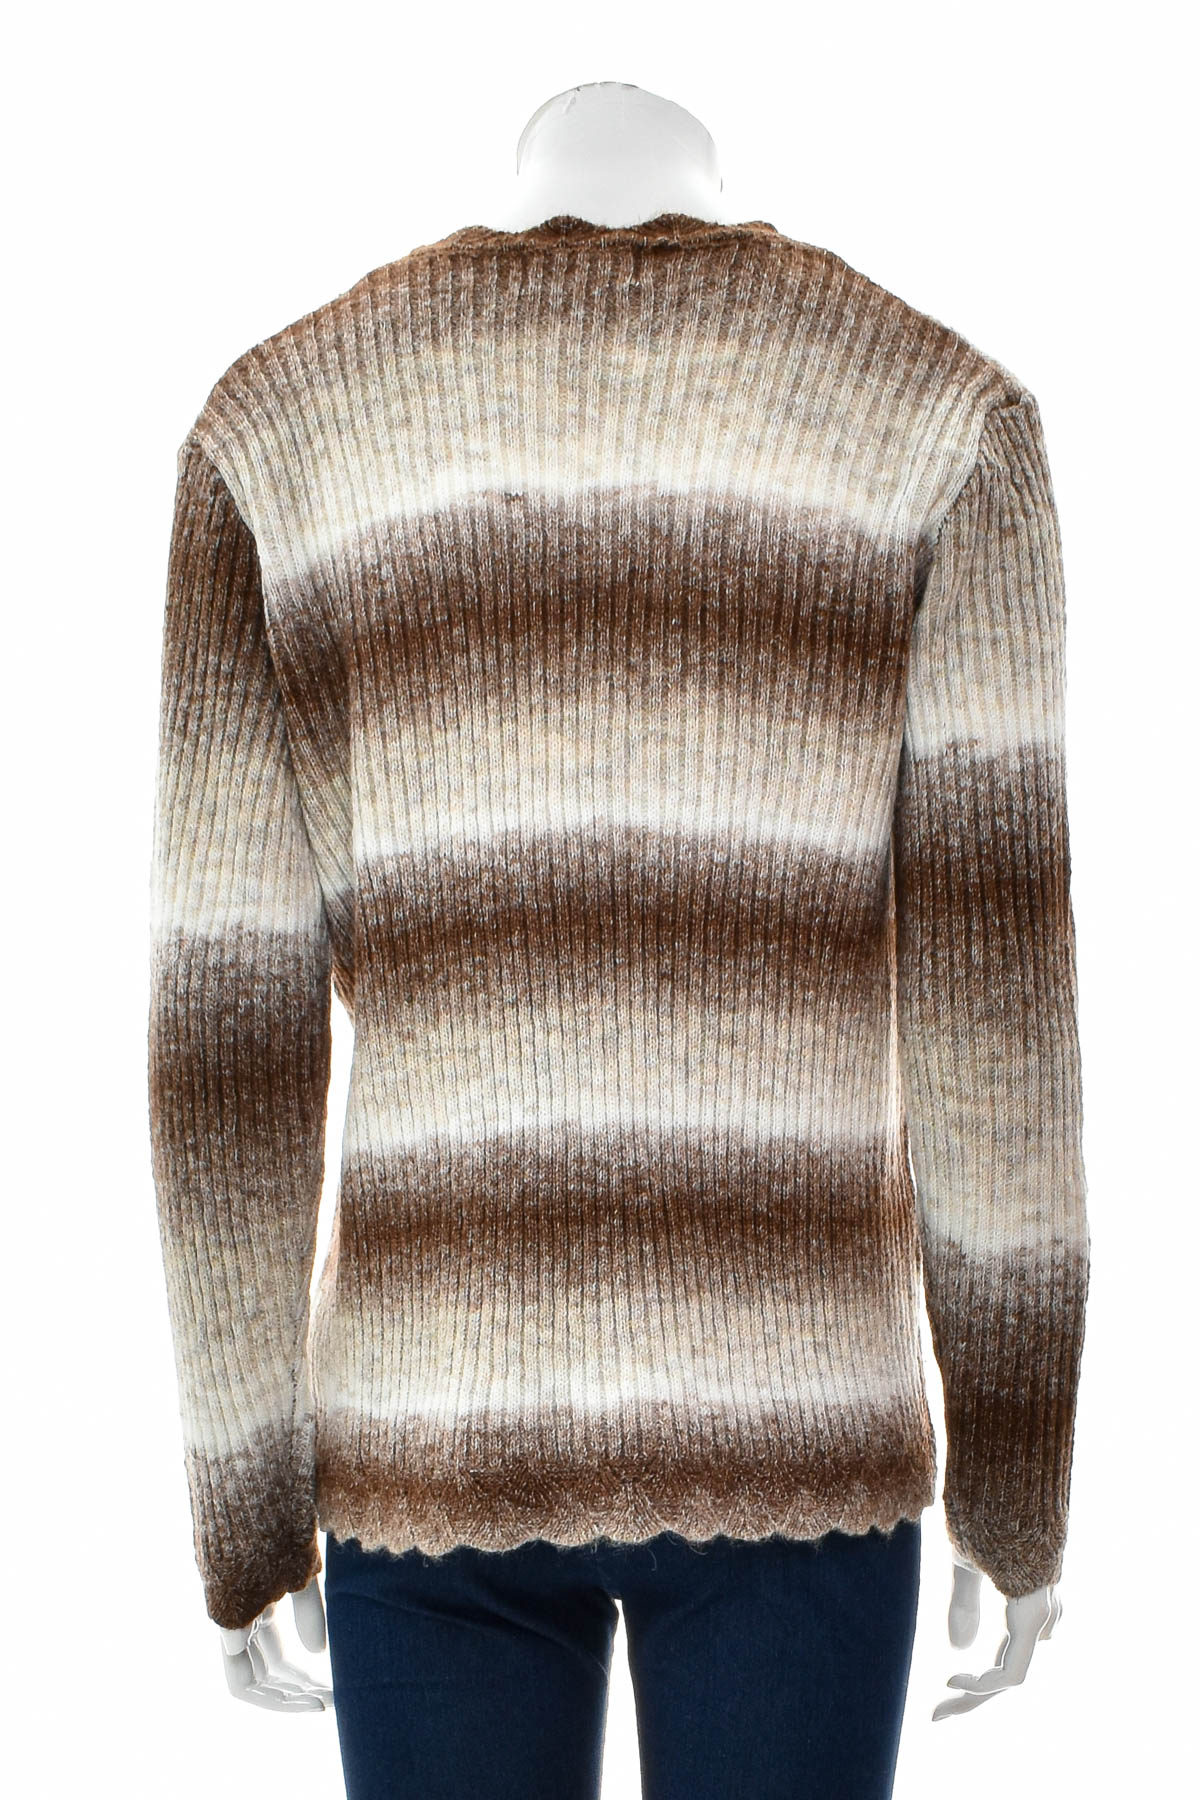 Women's sweater - Alfred Dunner - 1